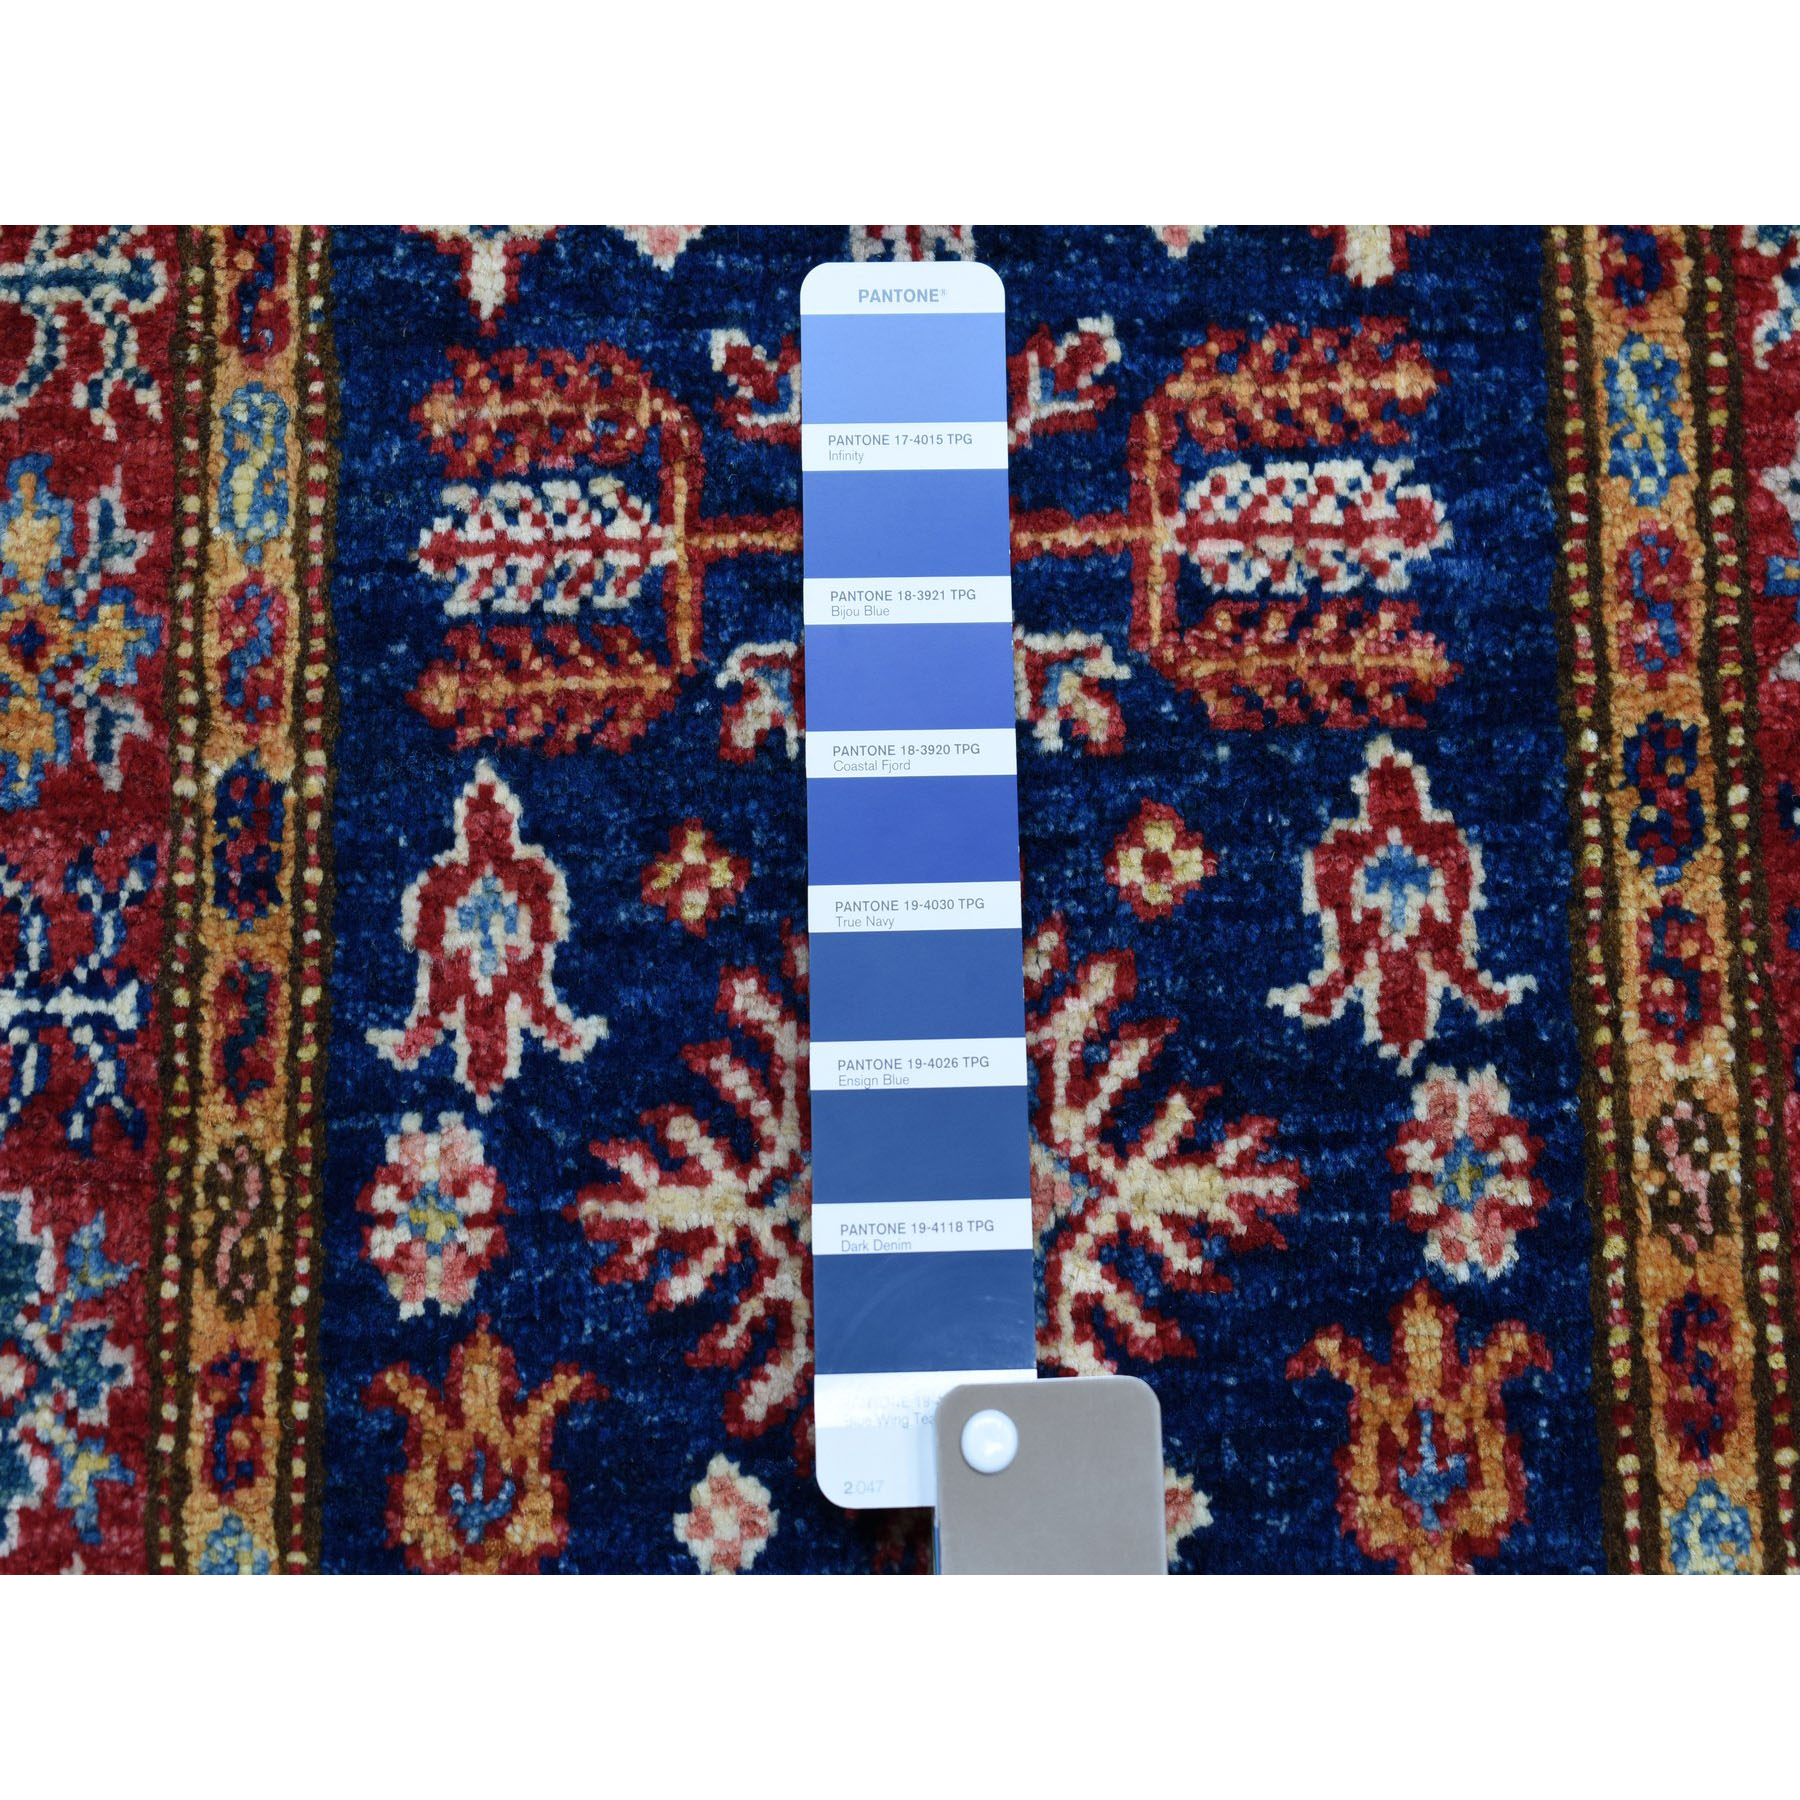 1-10 x3-2  Blue Super Kazak Geometric Design Pure Wool Hand-Knotted Oriental Rug 